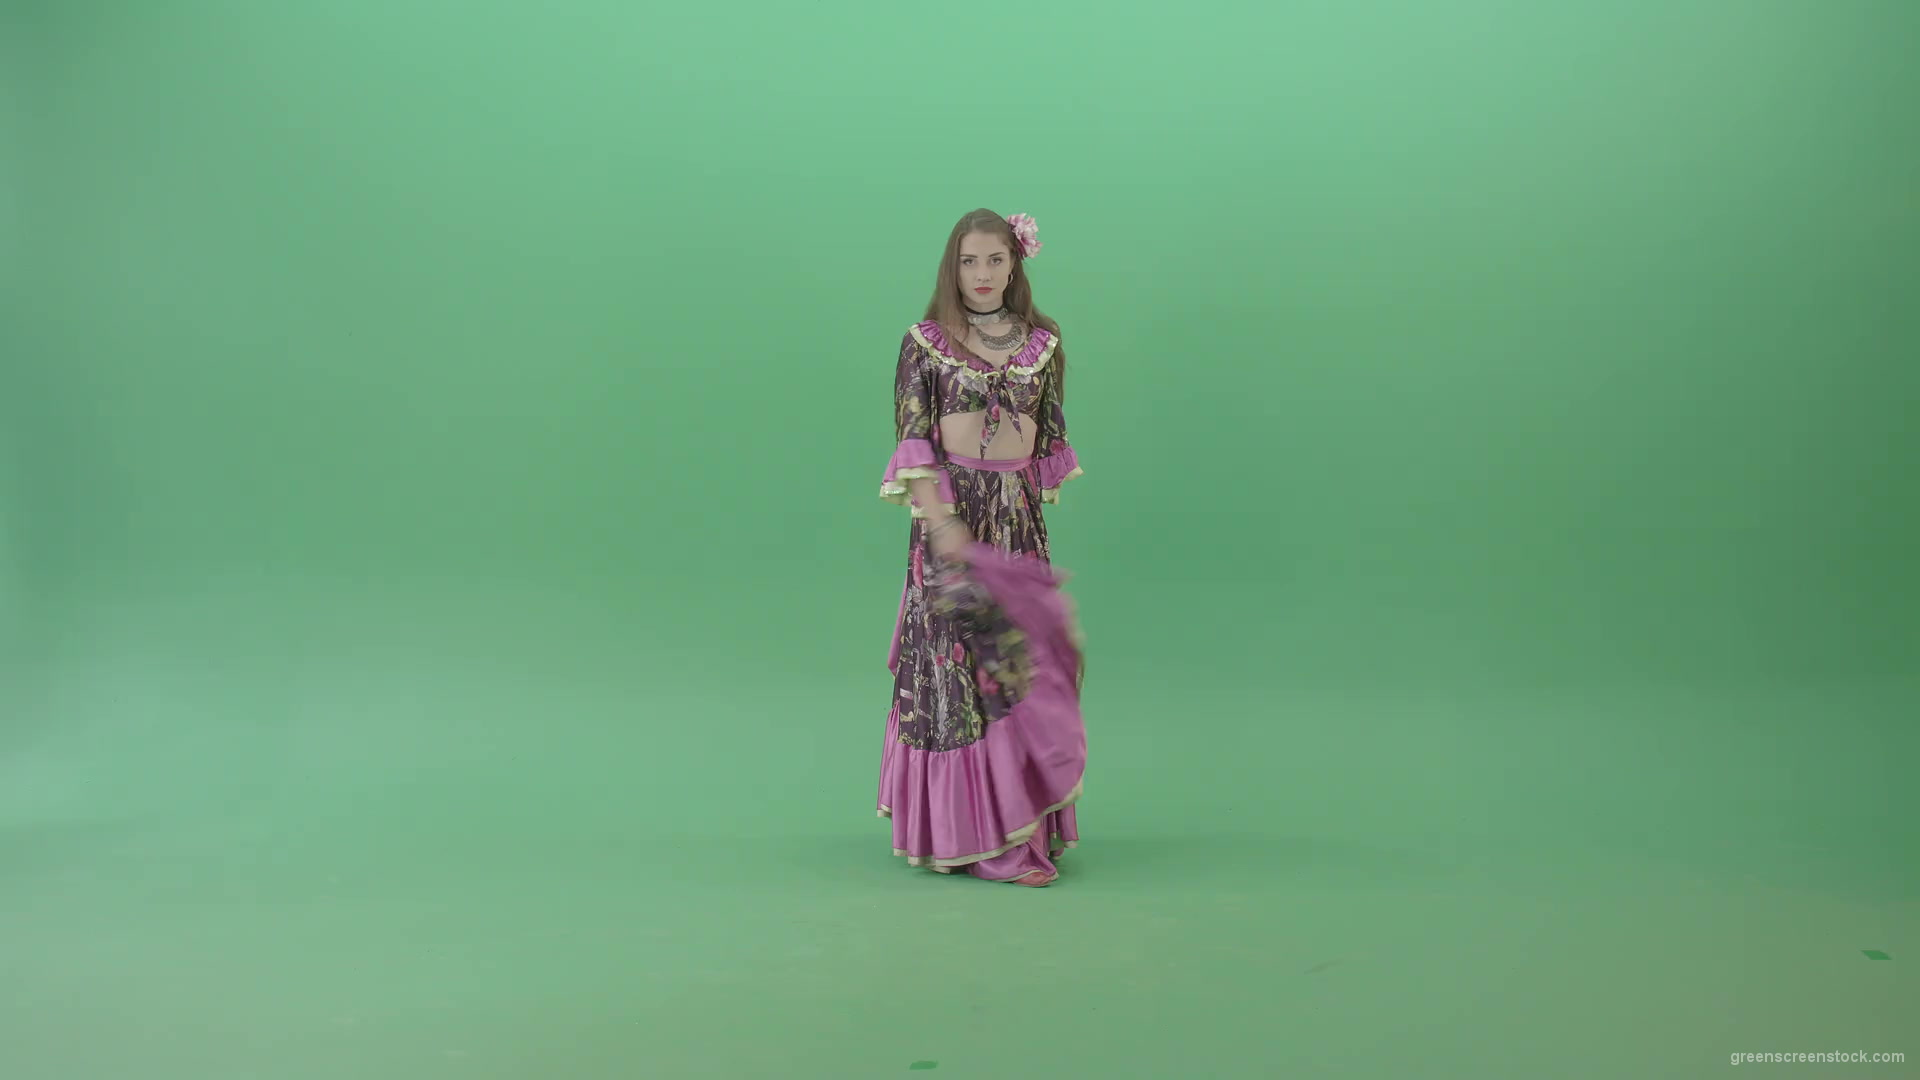 Beautiful-girl-in-balkan-pink-dress-dancing-gypsy-folk-dance-isolated-on-green-screen-4K-Video-Clip-1920_001 Green Screen Stock